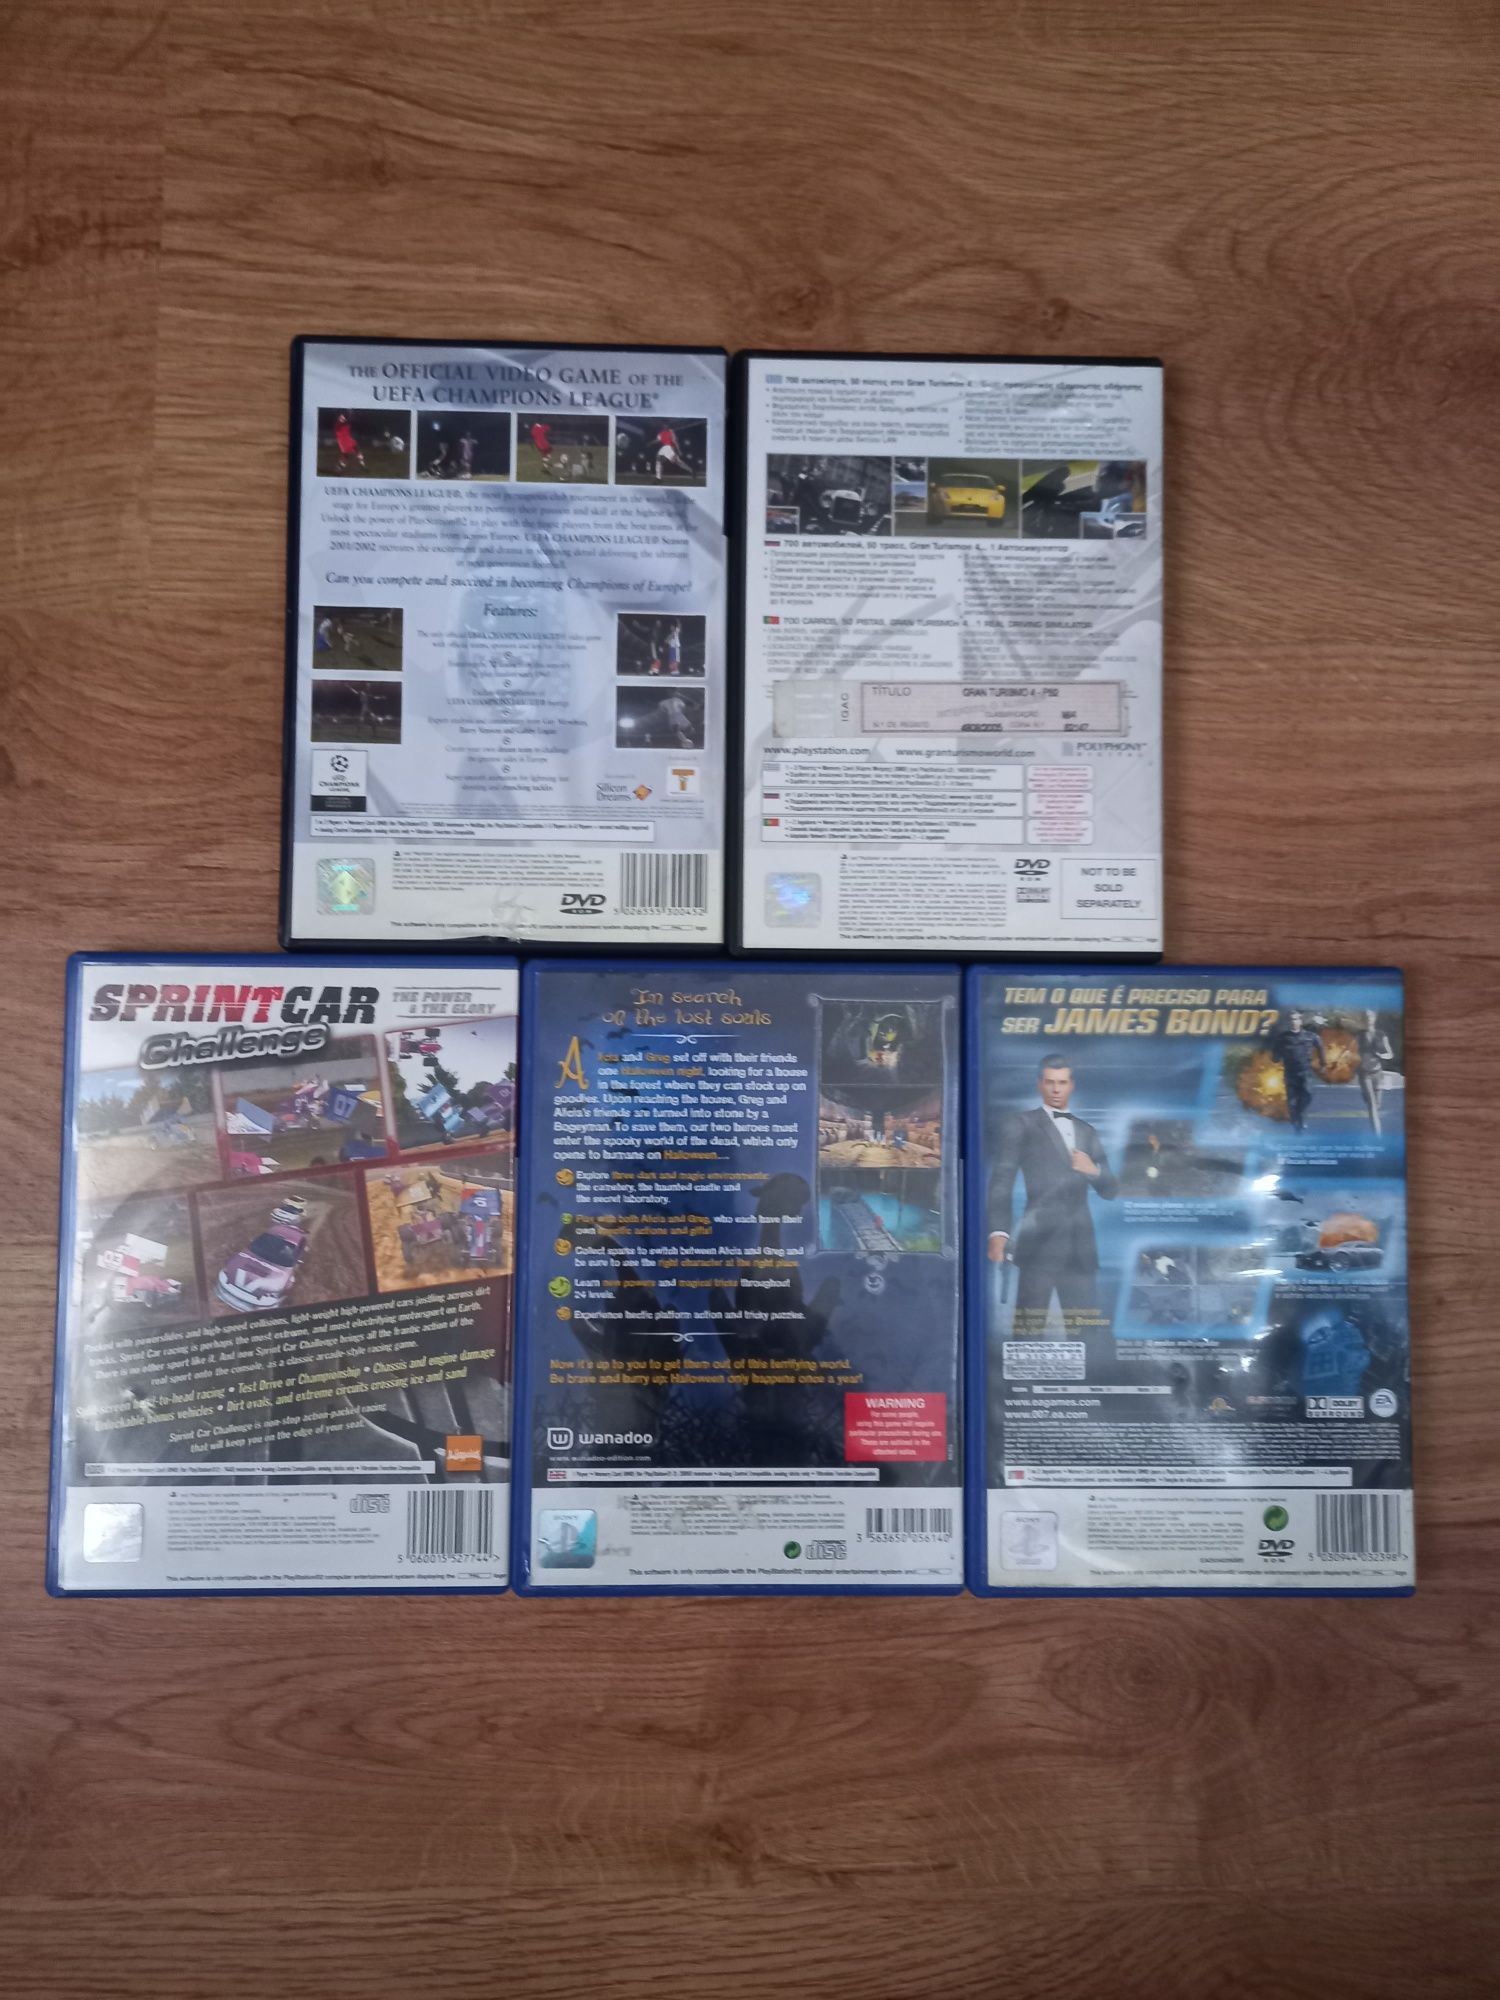 Jogos ps2 - Gran Turismo 4, UEFA CL 01-02, SprintCar, CastleWeen, 007